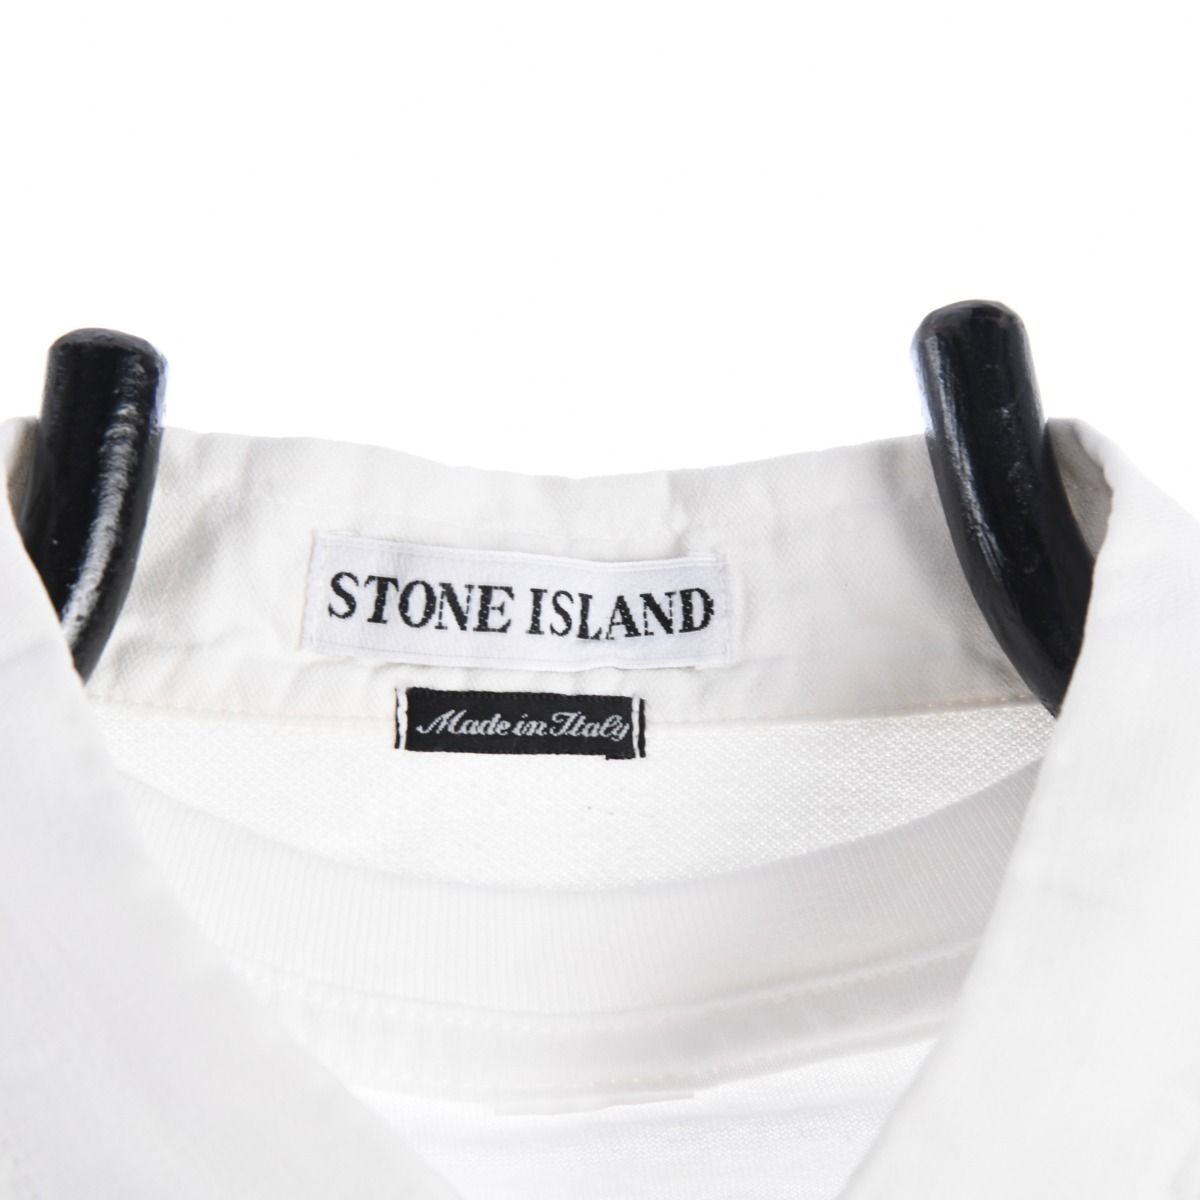 Stone Island S/S 1996 Lightweight Rugby Shirt